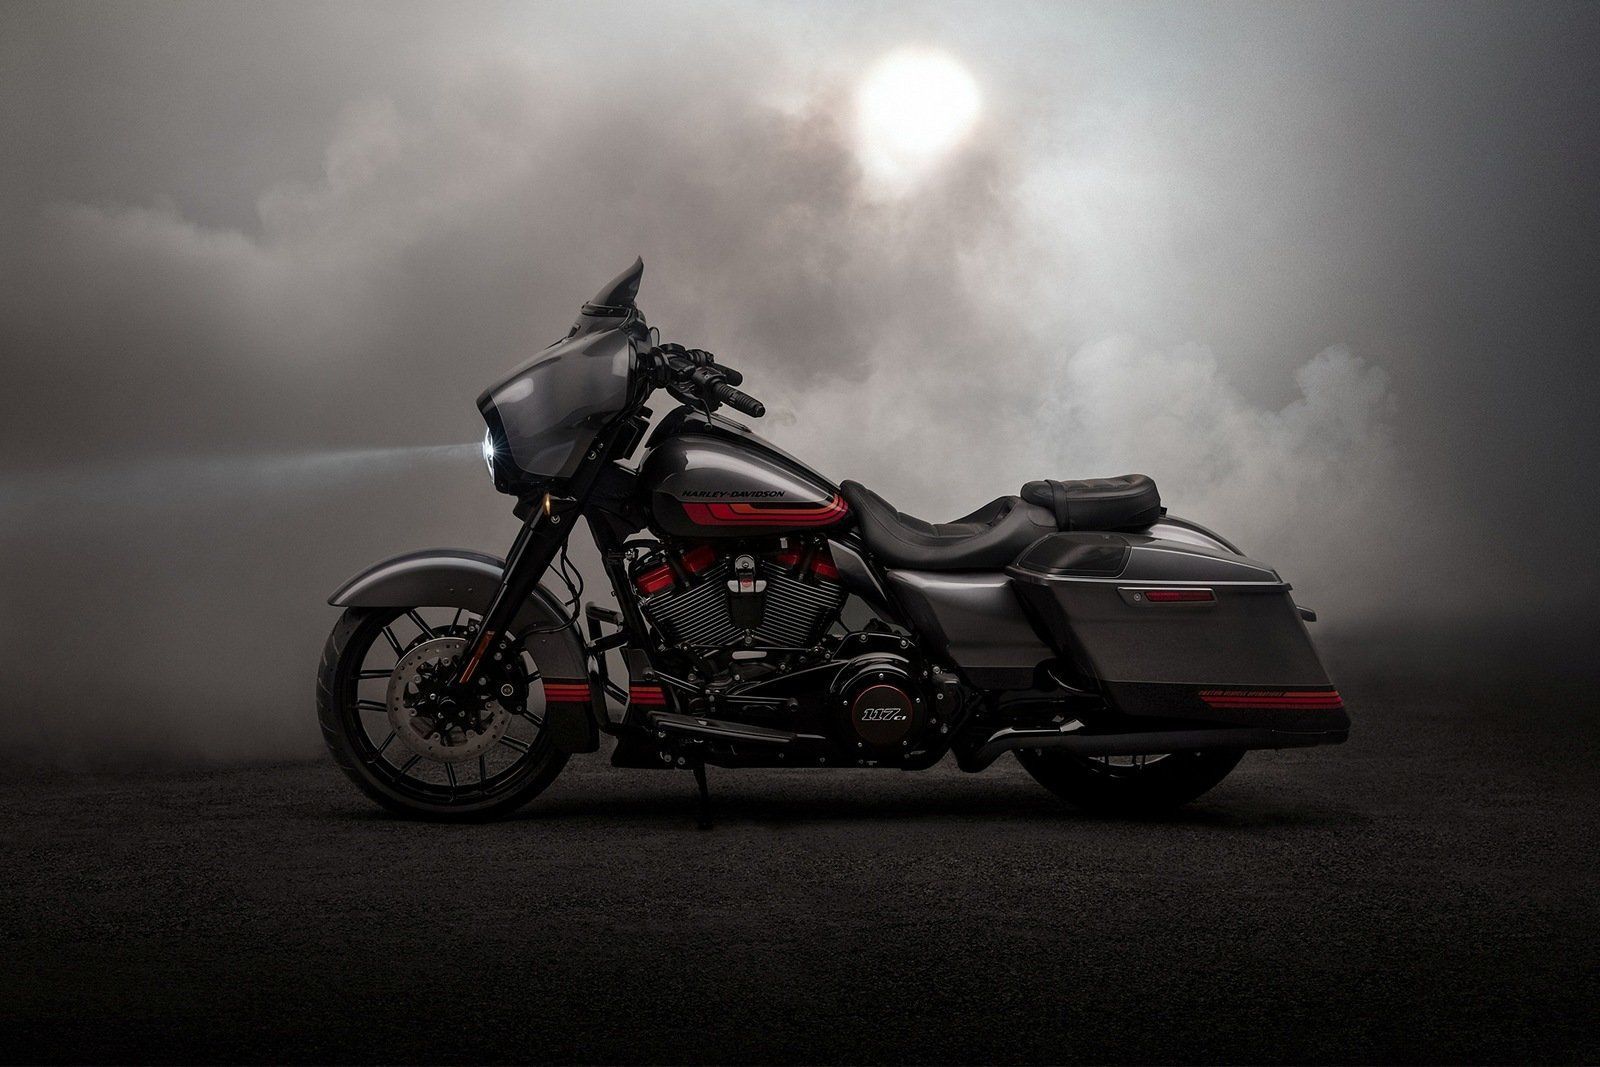 Harley-Davidson Road Glide Wallpapers